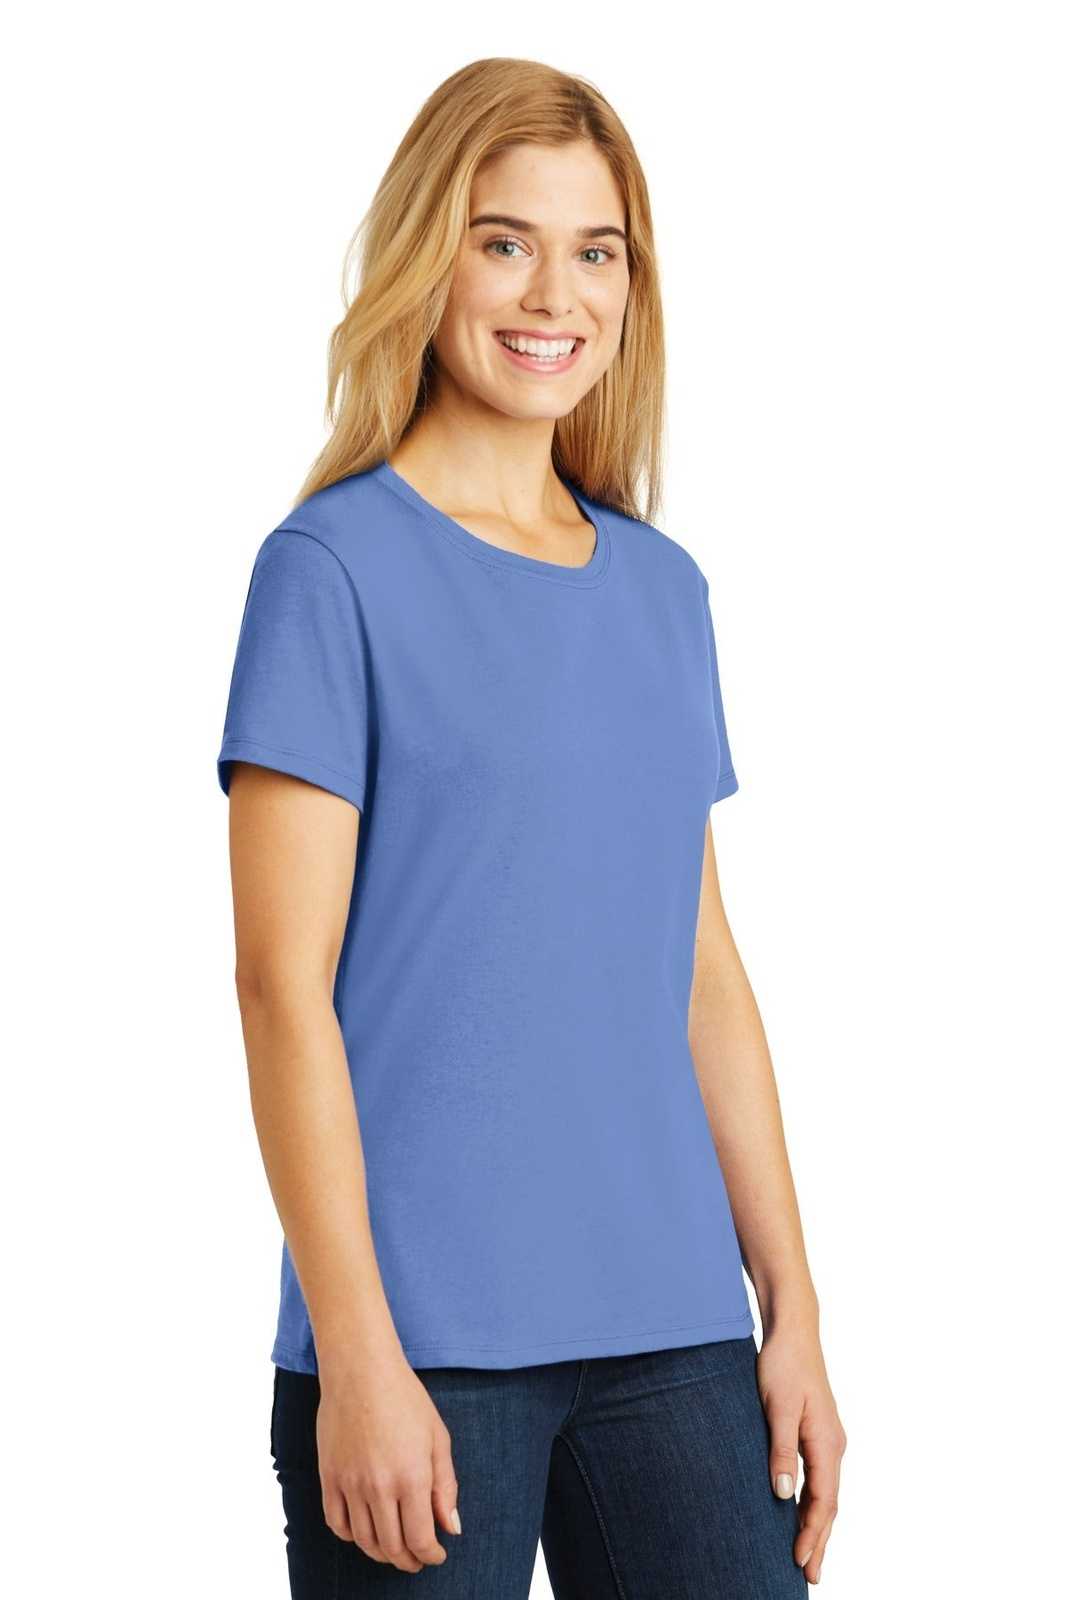 Hanes SL04 Ladies Nano-T Cotton T-Shirt - Carolina Blue - HIT a Double